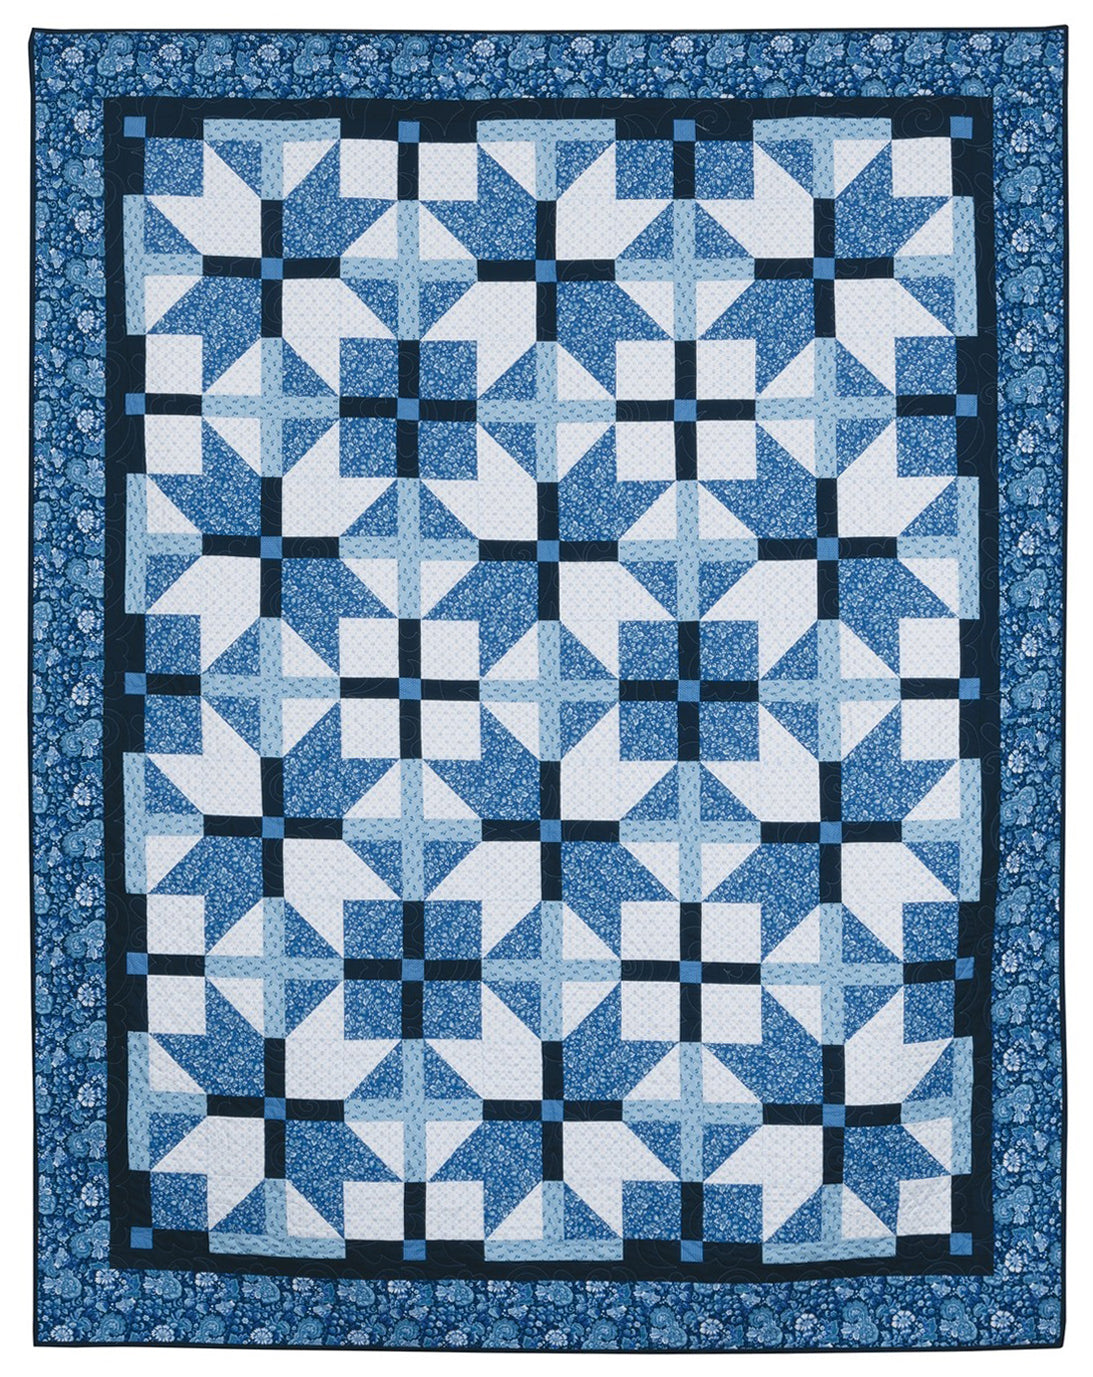 Mariposa Quilt Pattern PRINTED